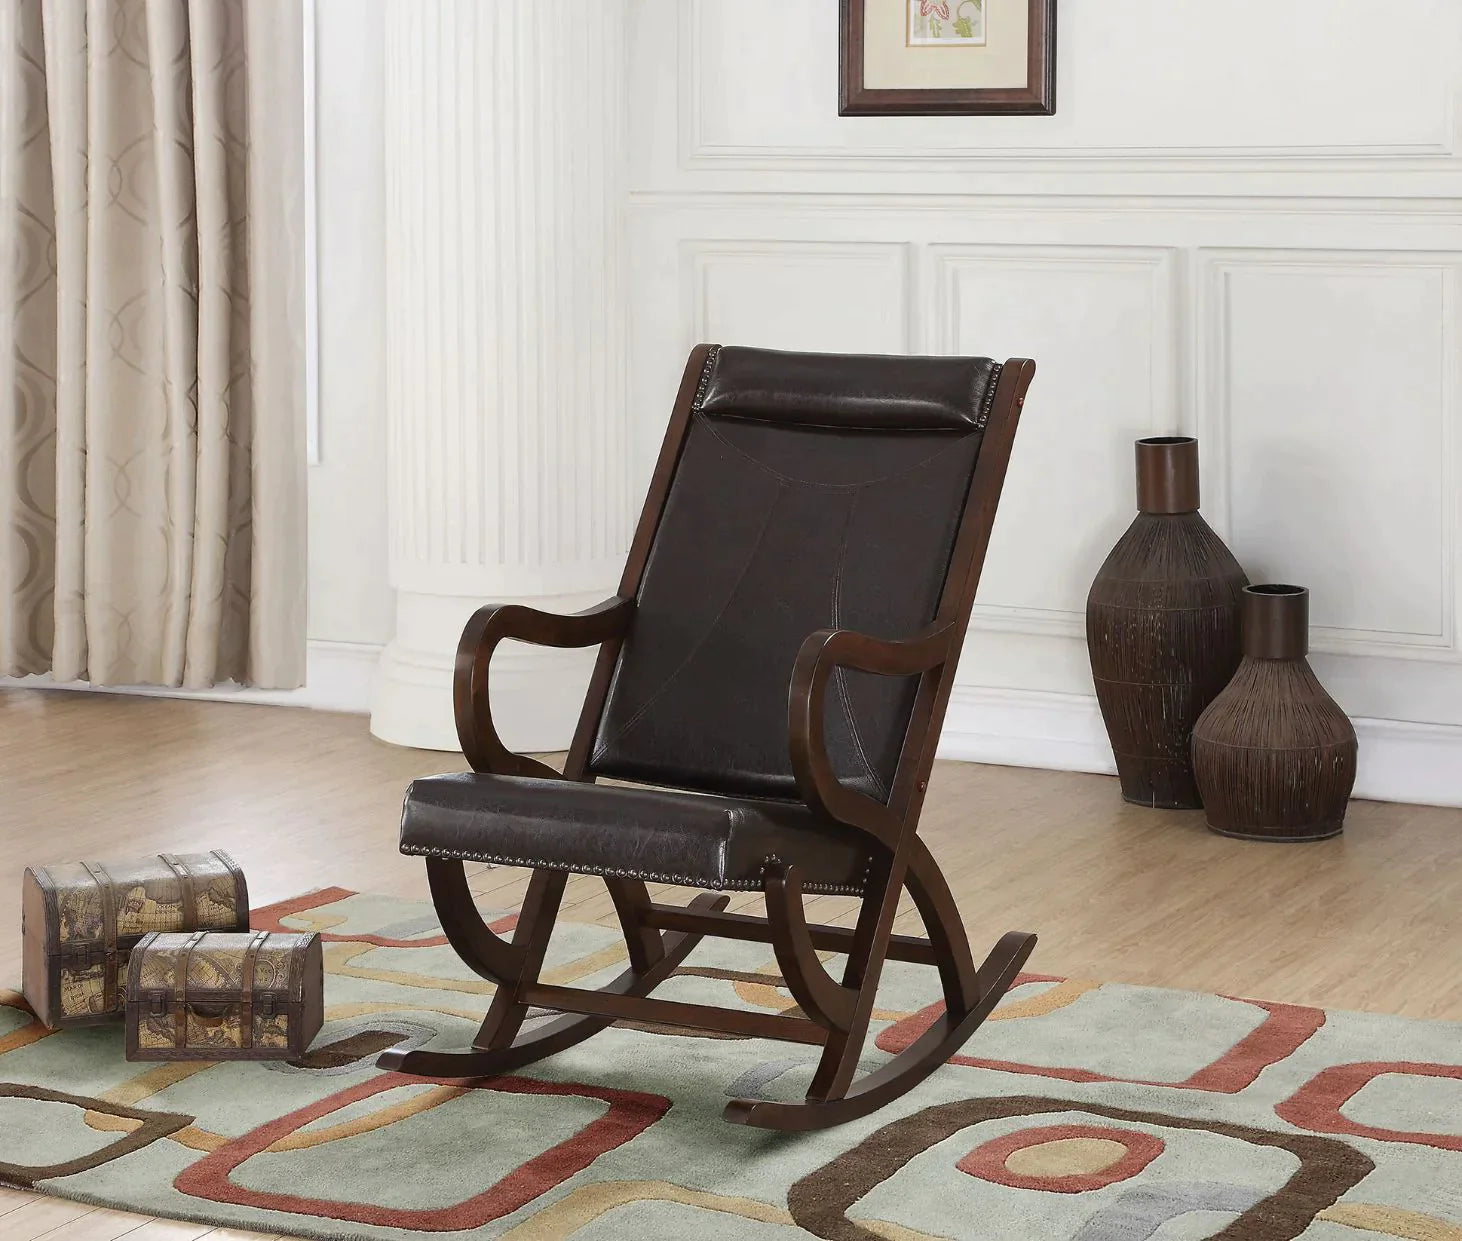 Triton Espresso PU & Walnut Rocking Chair Model 59535 By ACME Furniture